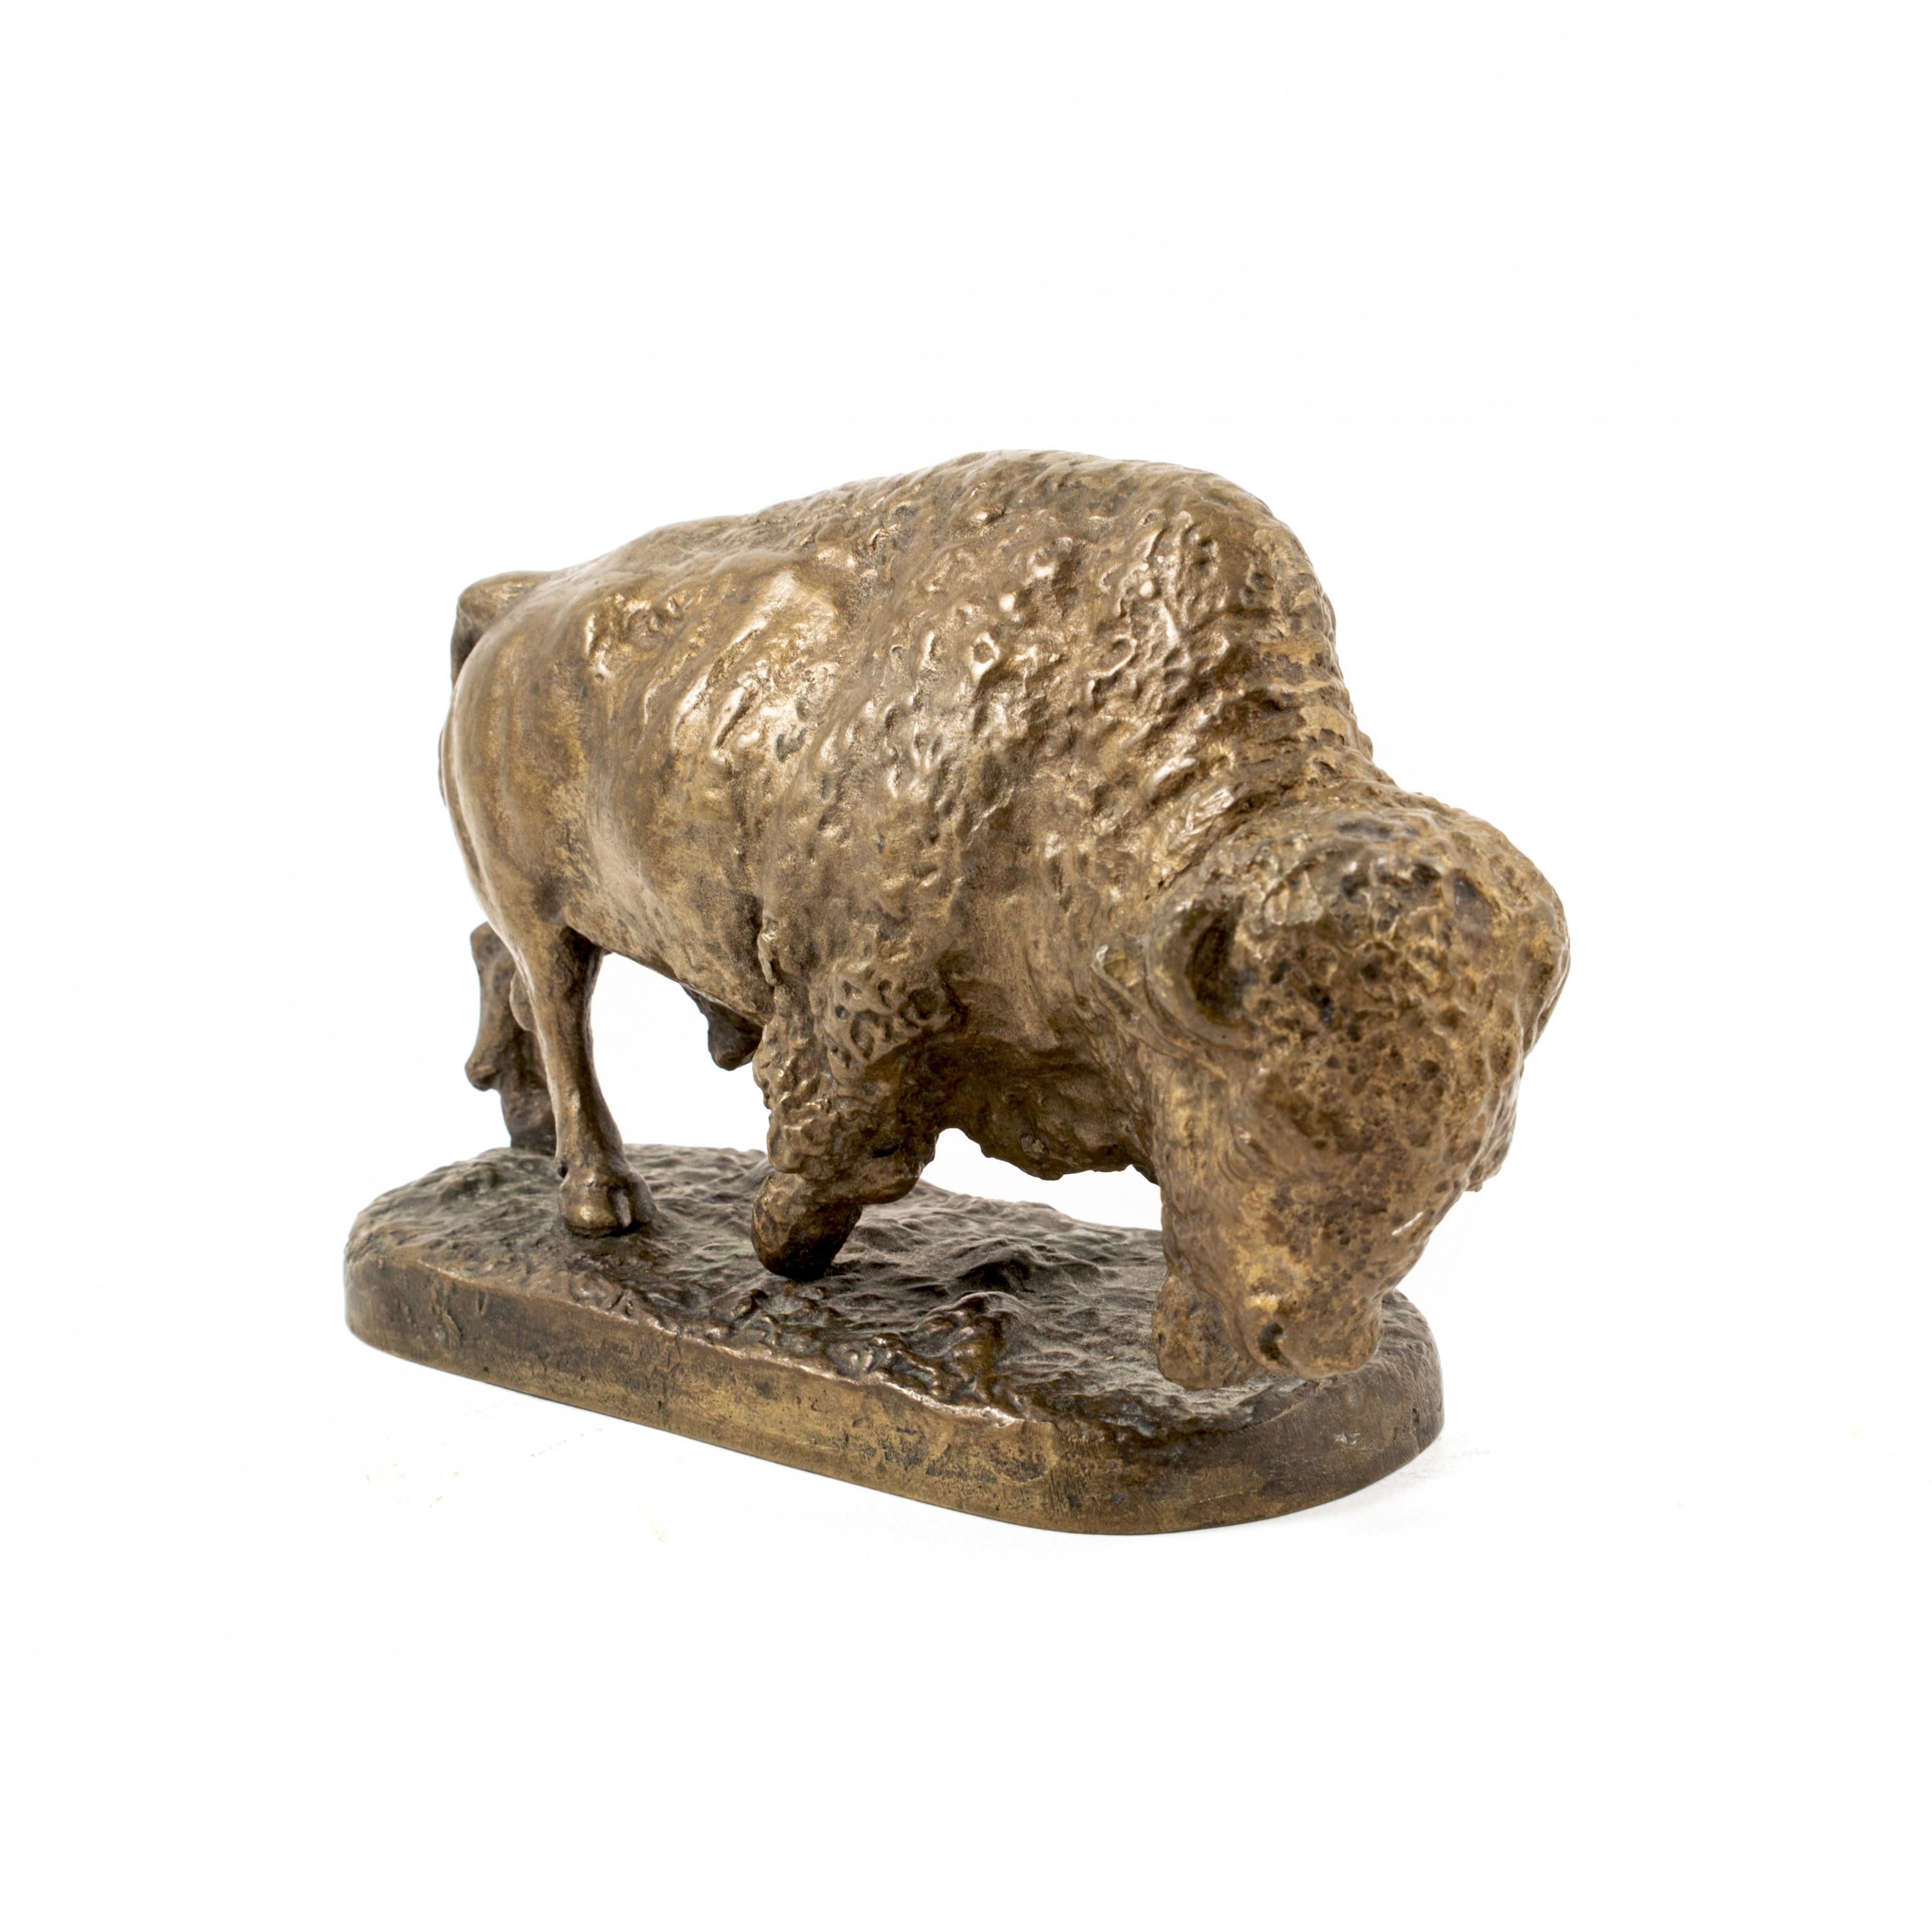 Niels Holm 1860-1933. Sculptor Danish
Patinated bronze sculpture of a bison. Nice quality.
Signed Niels Holm 1900-1920.

 